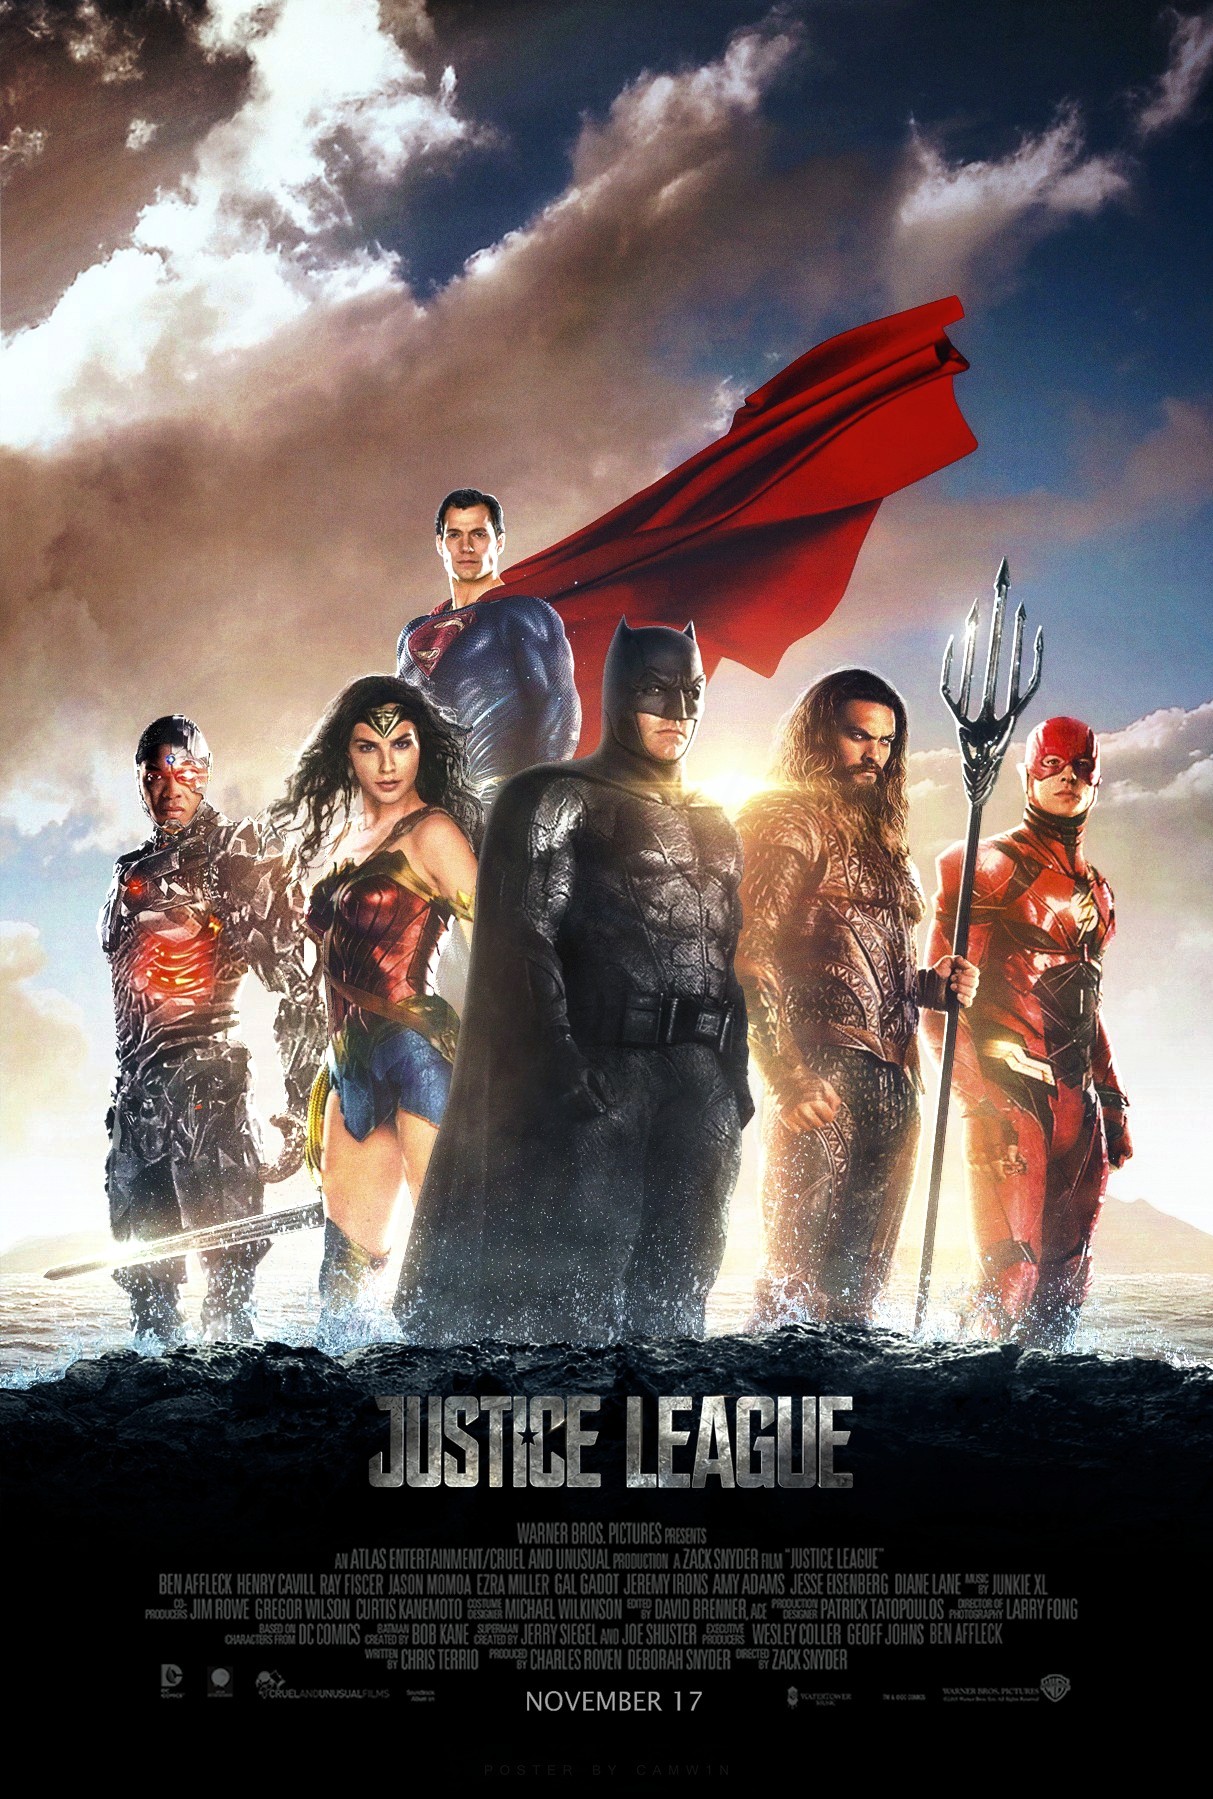 Stiahni si Filmy CZ/SK dabing Liga spravedlnosti / Justice League (2017)(CZ) = CSFD 58%